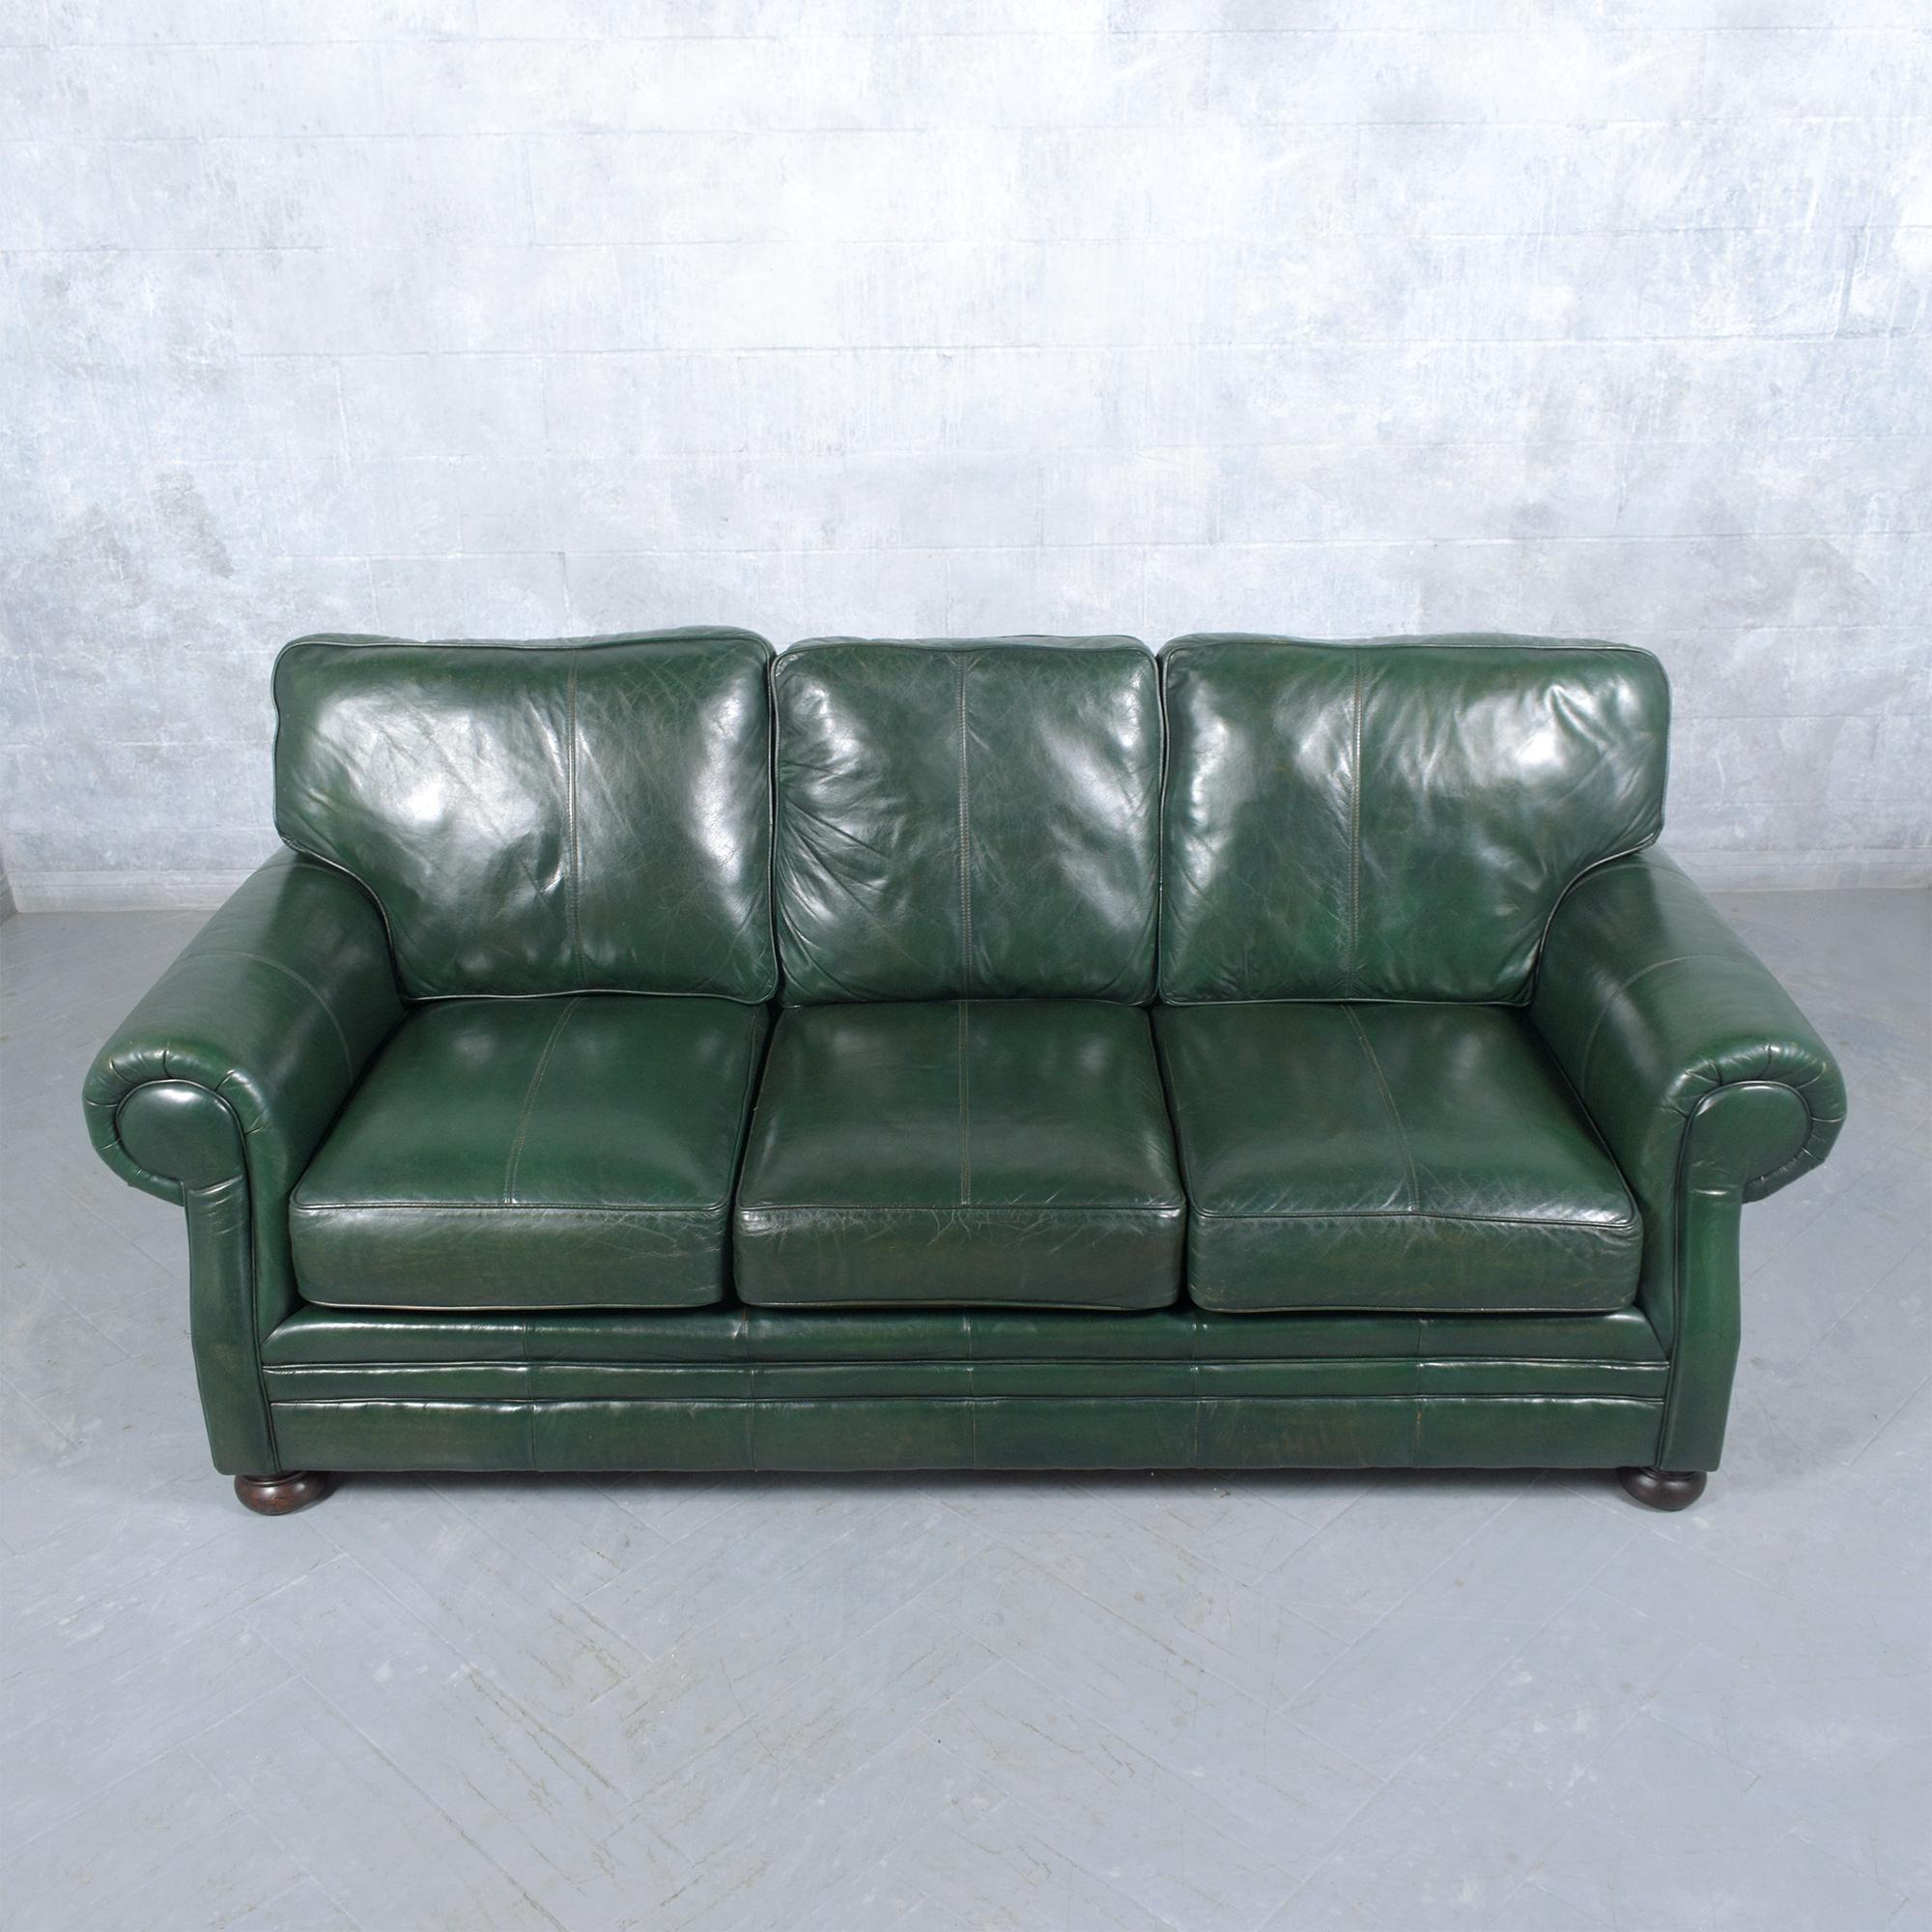 Elegant 1980s Restored Leather Sofa: A Blend of Vintage and Modern For Sale 2